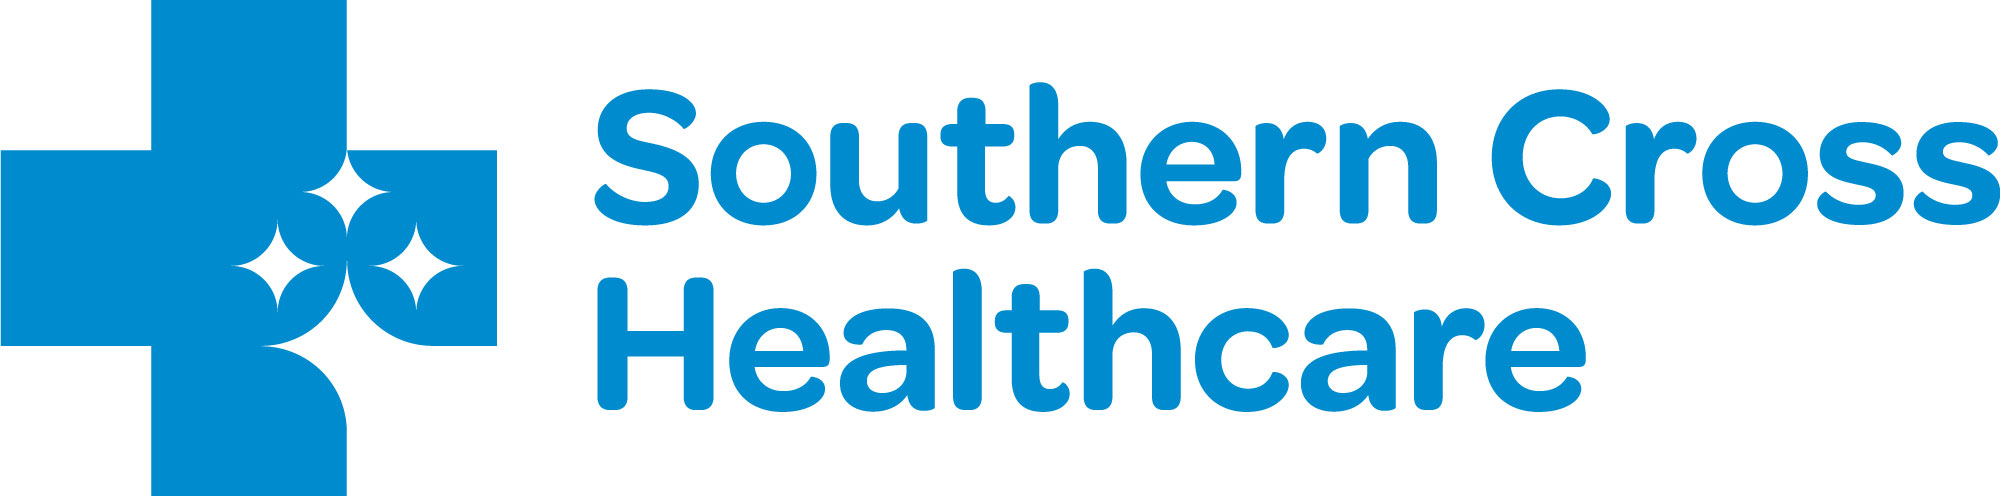 Southern Cross Healthcare Careers Logo